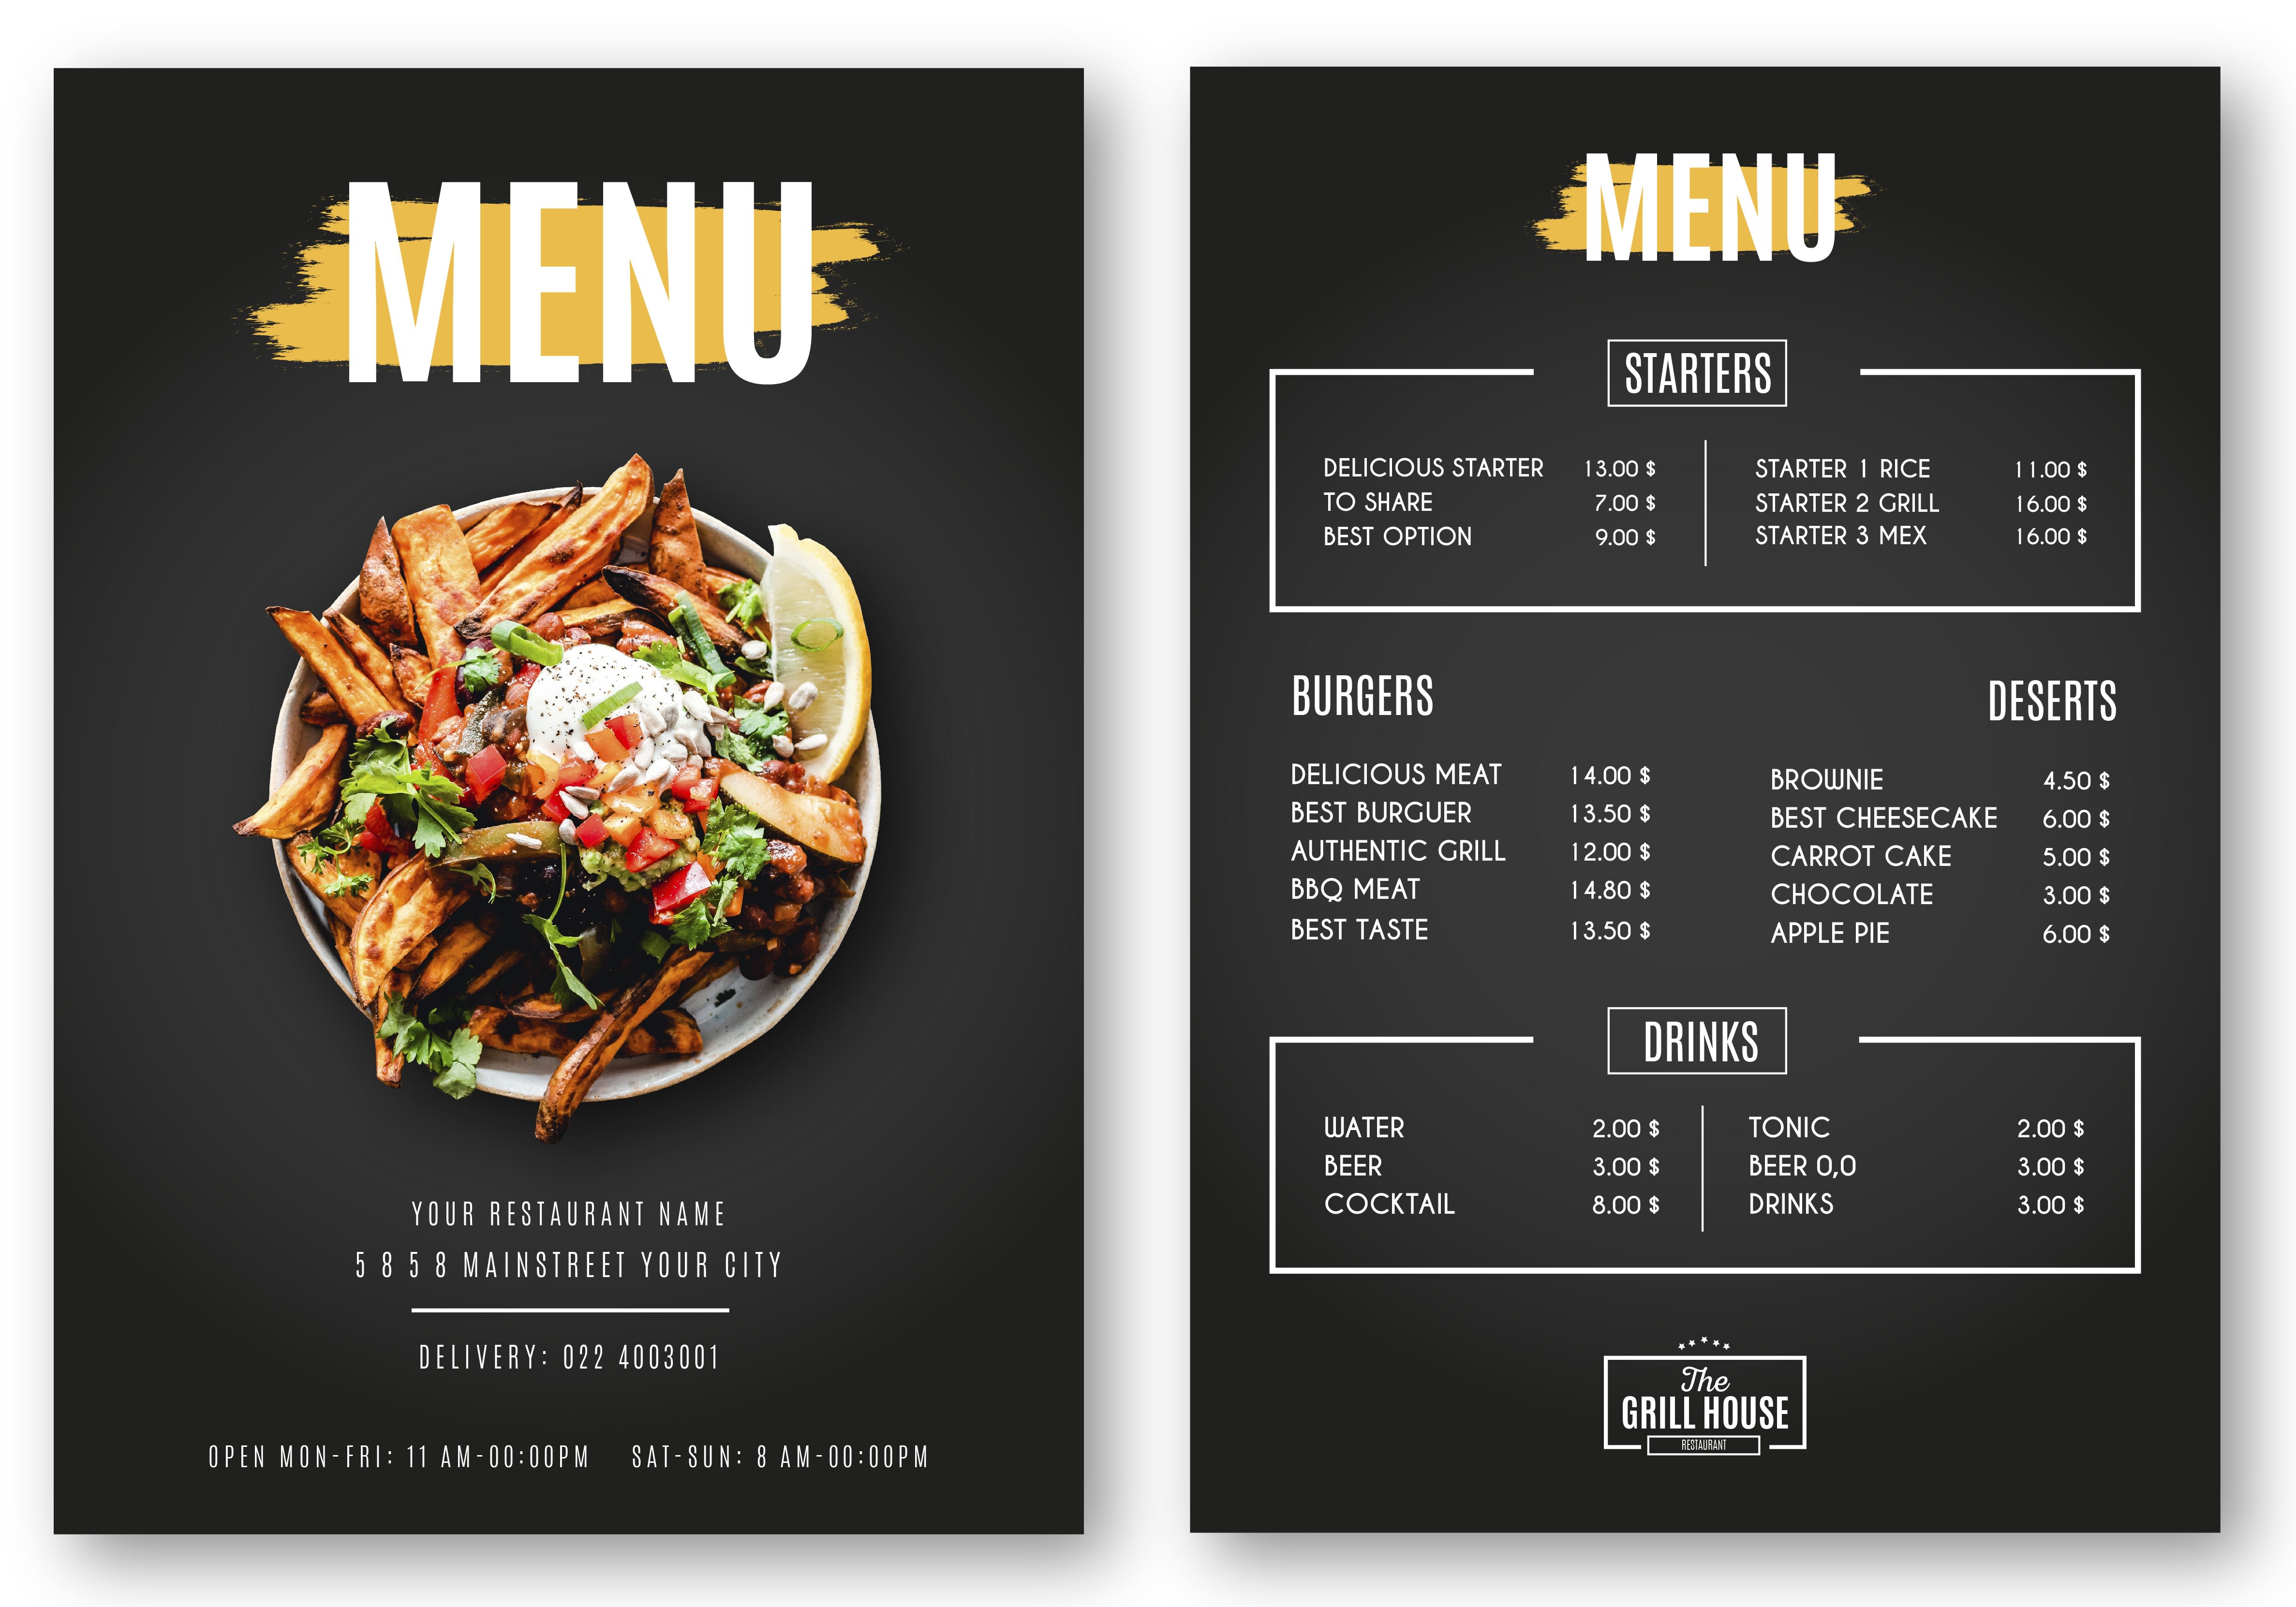 Design Menu Card For Your Restaurant Or Hotel By Aqsa Shaikh